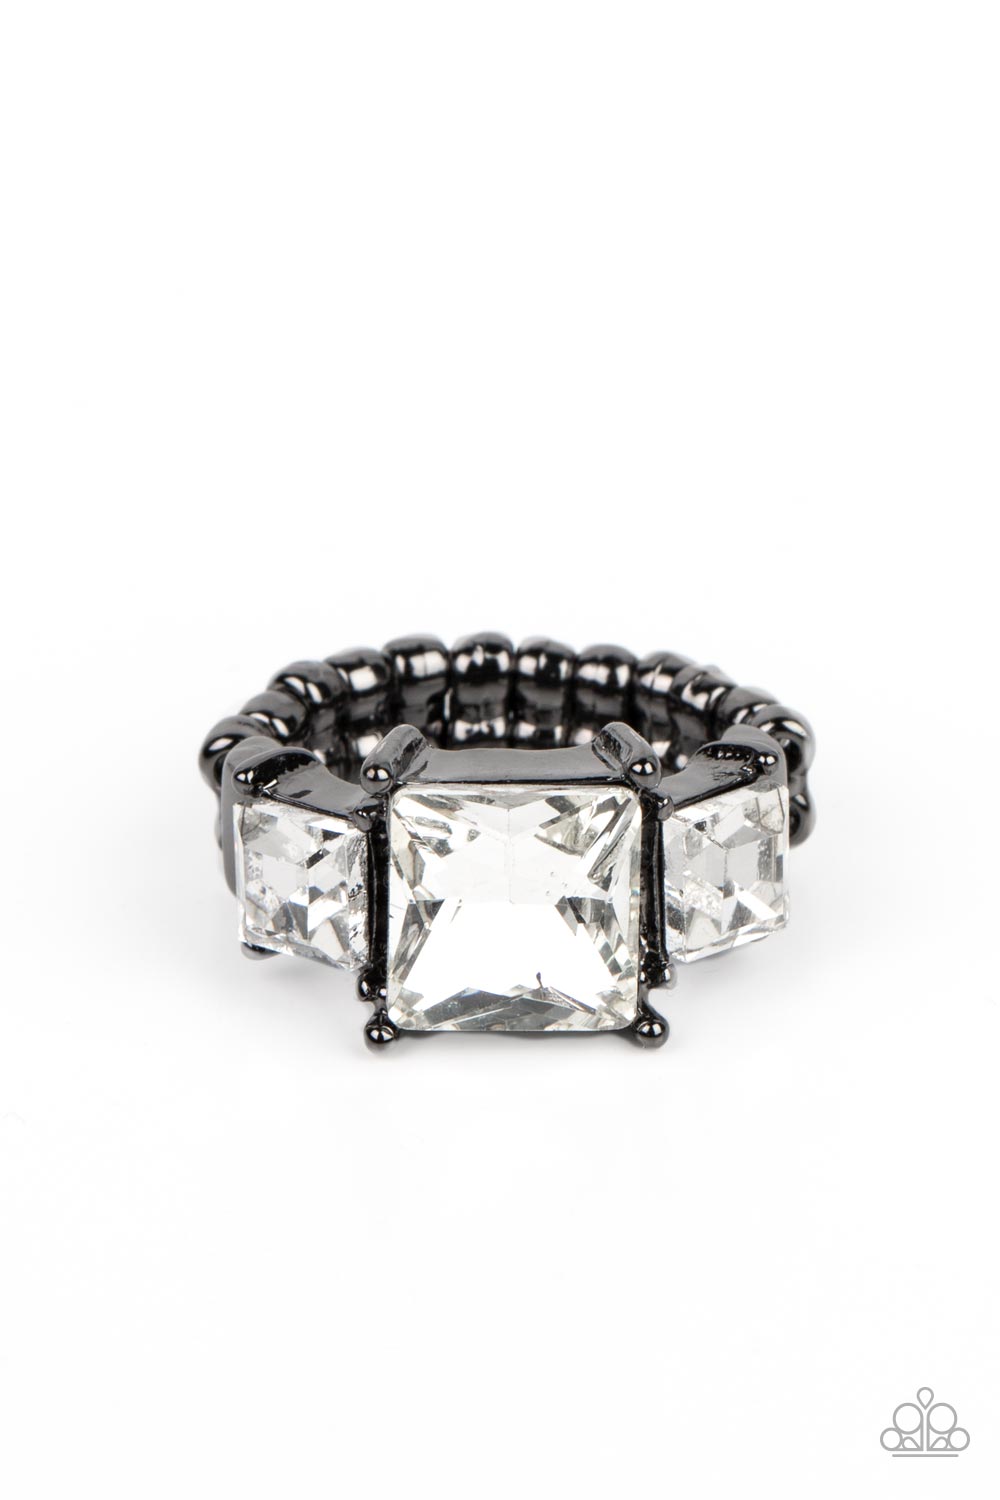 Treasured Twinkle Gunmetal Black & White Rhinestone Ring - Paparazzi Accessories- lightbox - CarasShop.com - $5 Jewelry by Cara Jewels